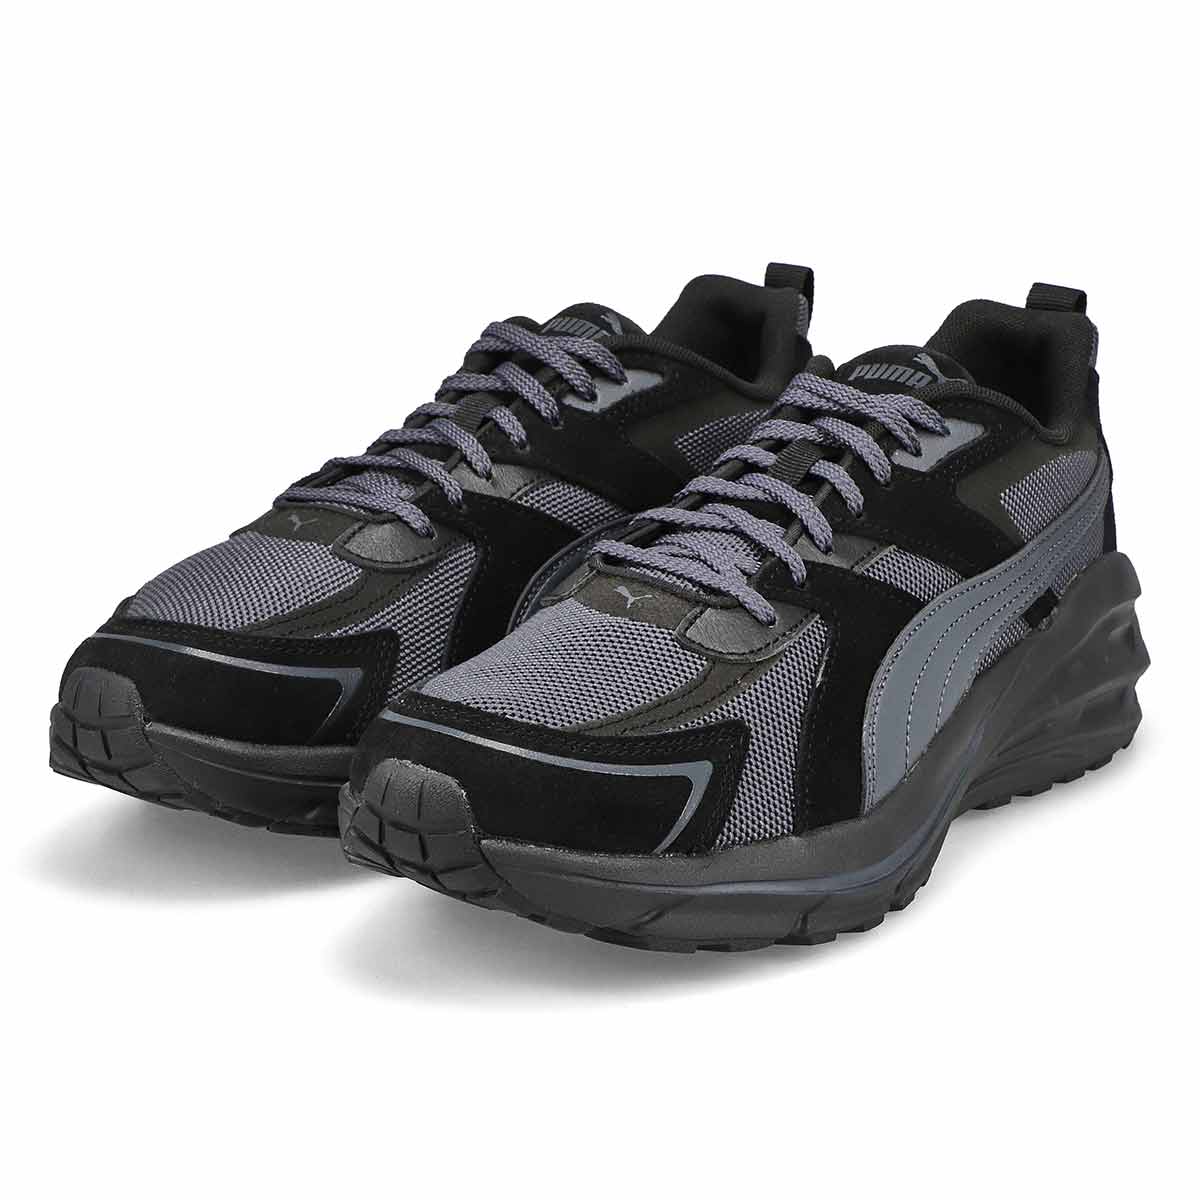 Men's Hypnotic LS Lace Up Sneaker - Black/Grey